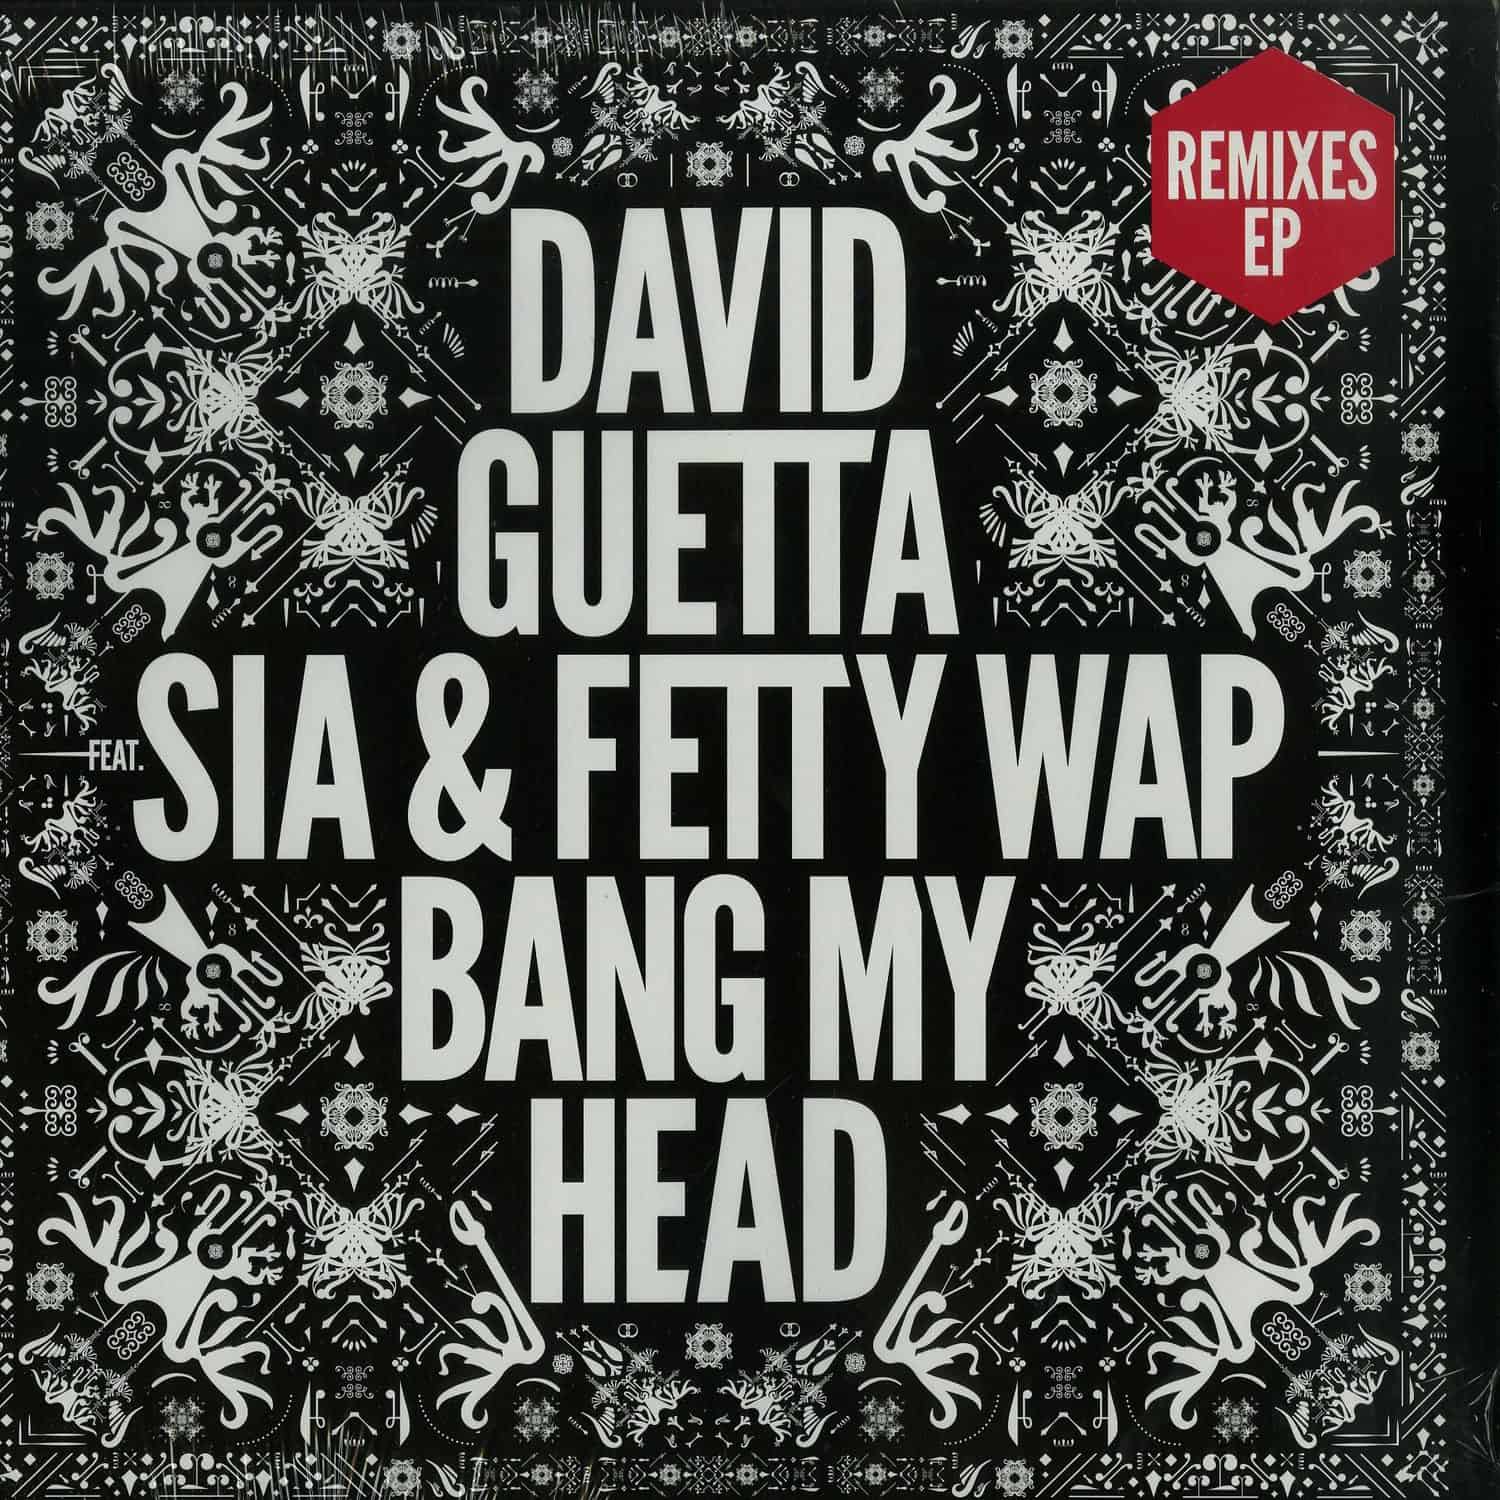 David Guetta ft. Sia & Fetty Wap - BANG MY HEAD 